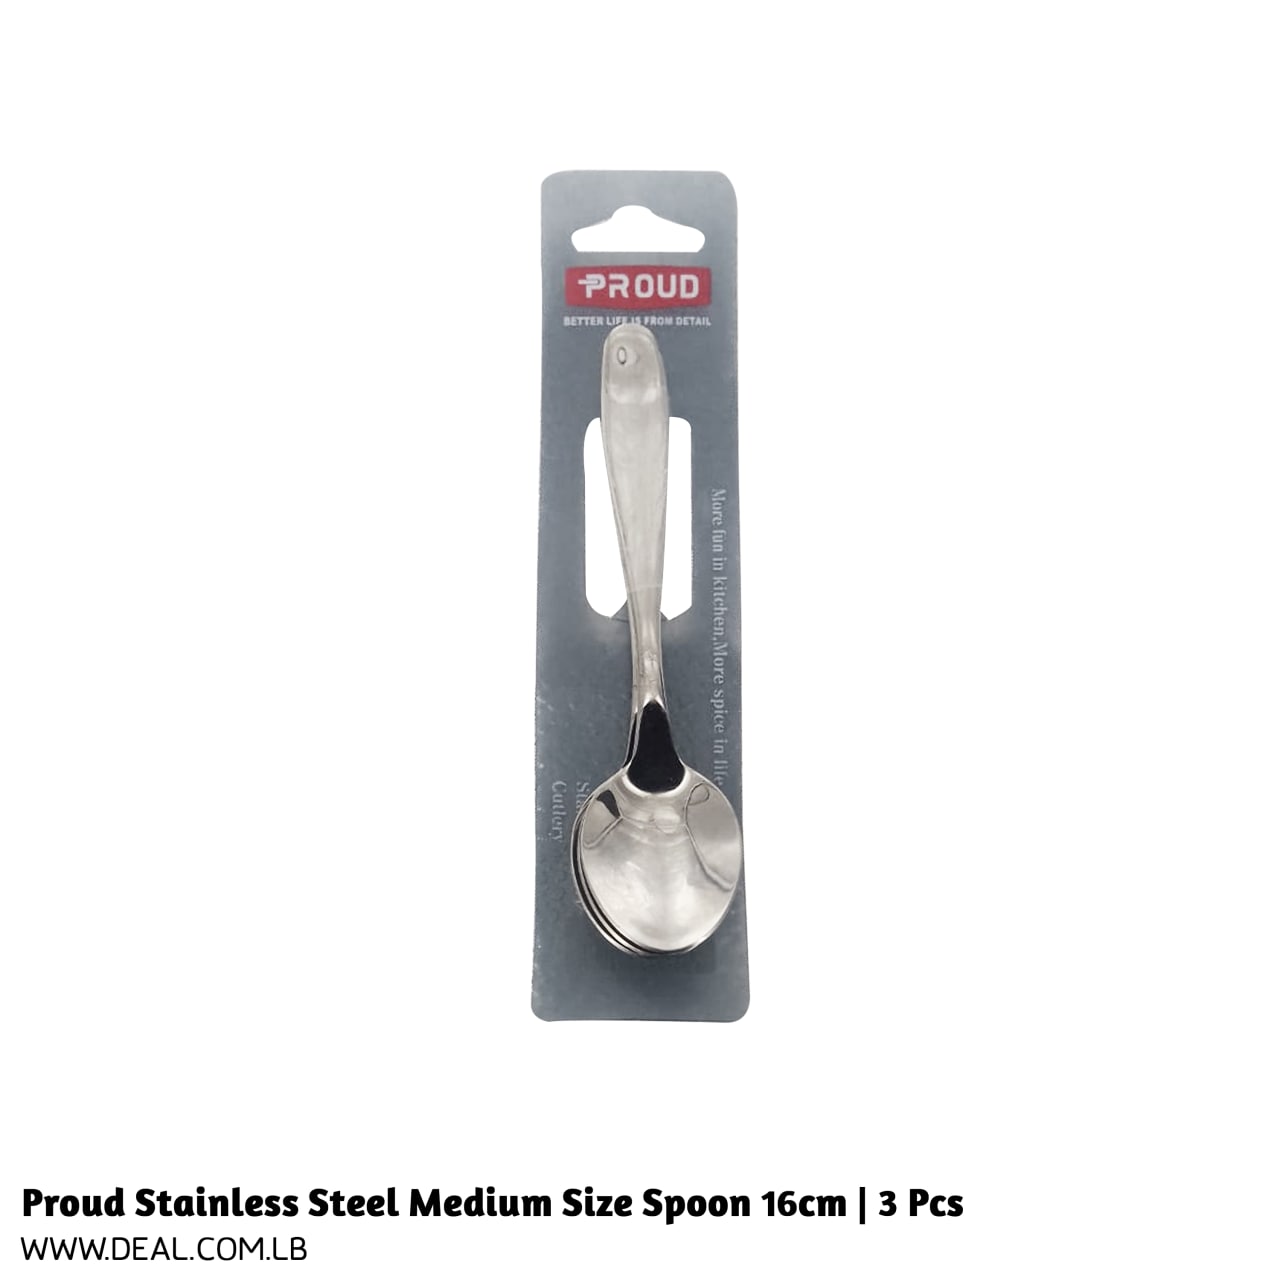 Proud+Stainless+Steel+Medium+Size+Spoon+16cm+%7C+3+Pcs